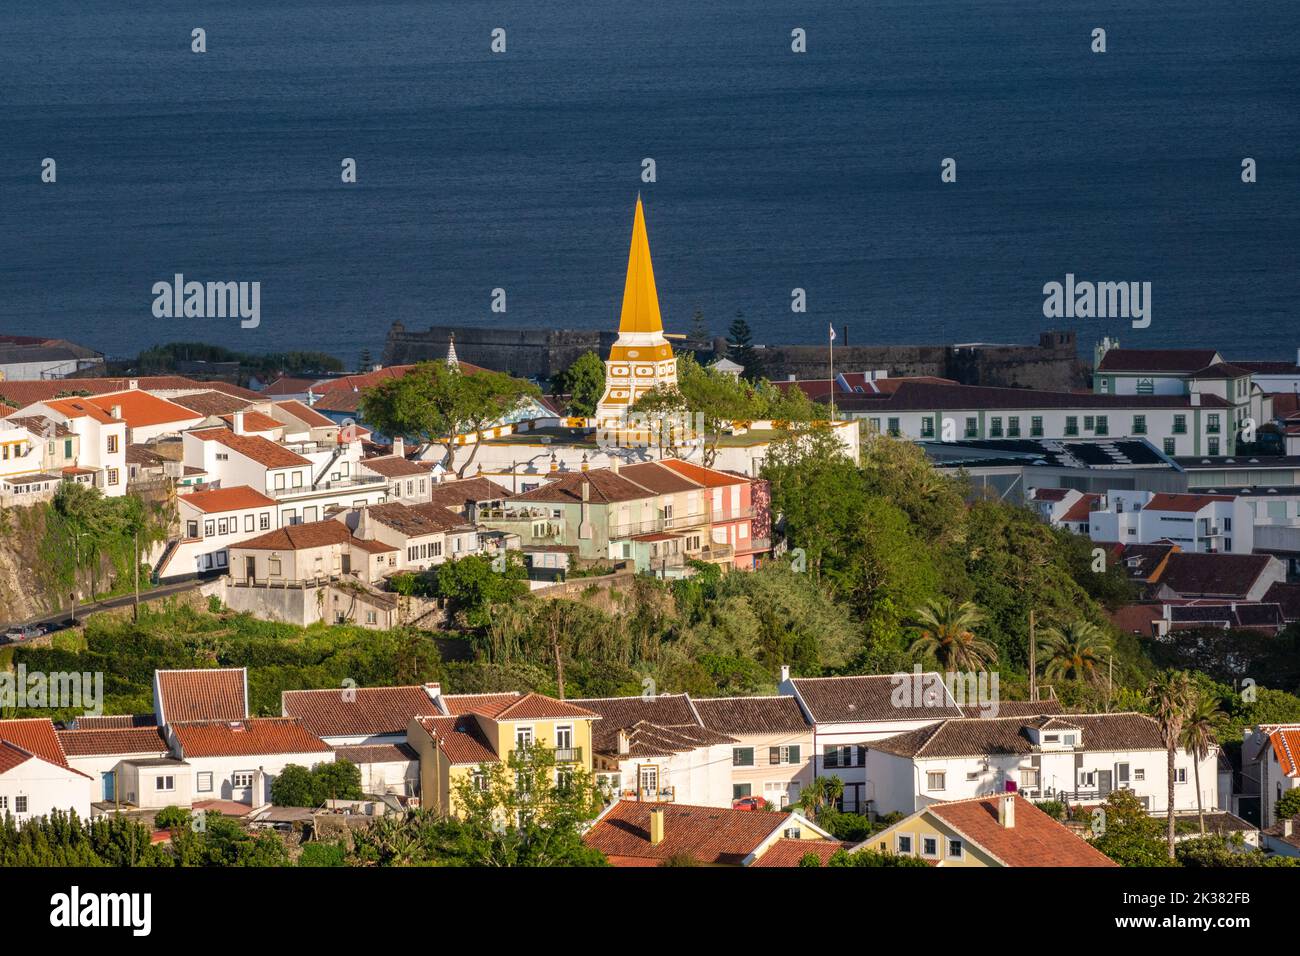 Outeiro da Memoria, un monumento erigido en honor del rey Pedro IV en 1846, domina el horizonte mirando hacia la bahía de Angra en Angra do Heroismo, isla de Terceira, Azores, Portugal. Foto de stock